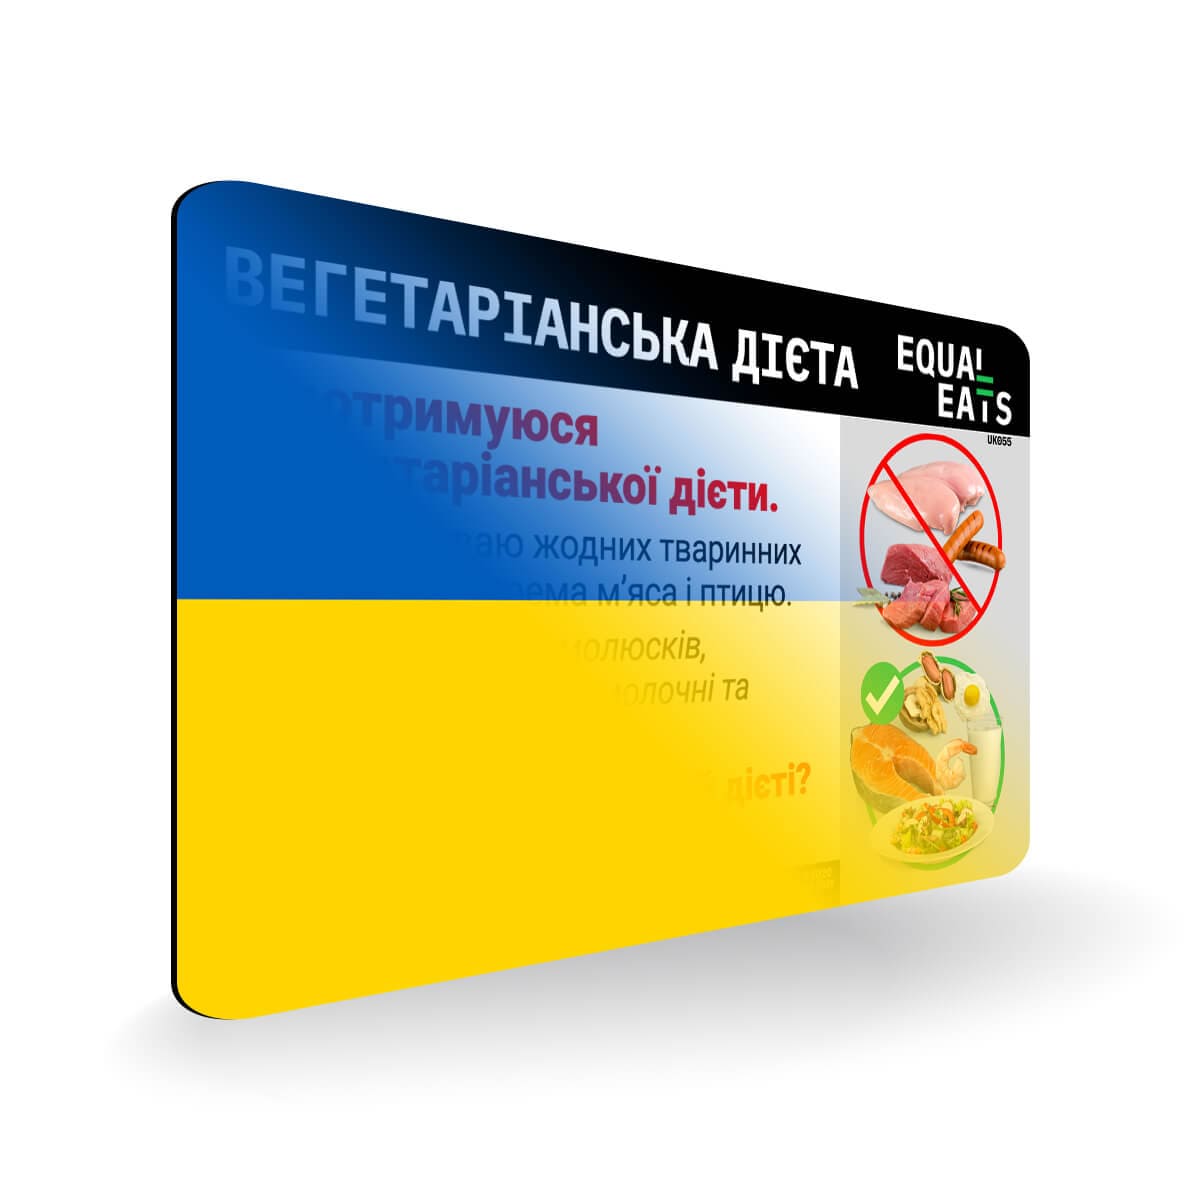 Pescatarian in Ukrainian. Pescatarian Diet Traveling in Ukraine